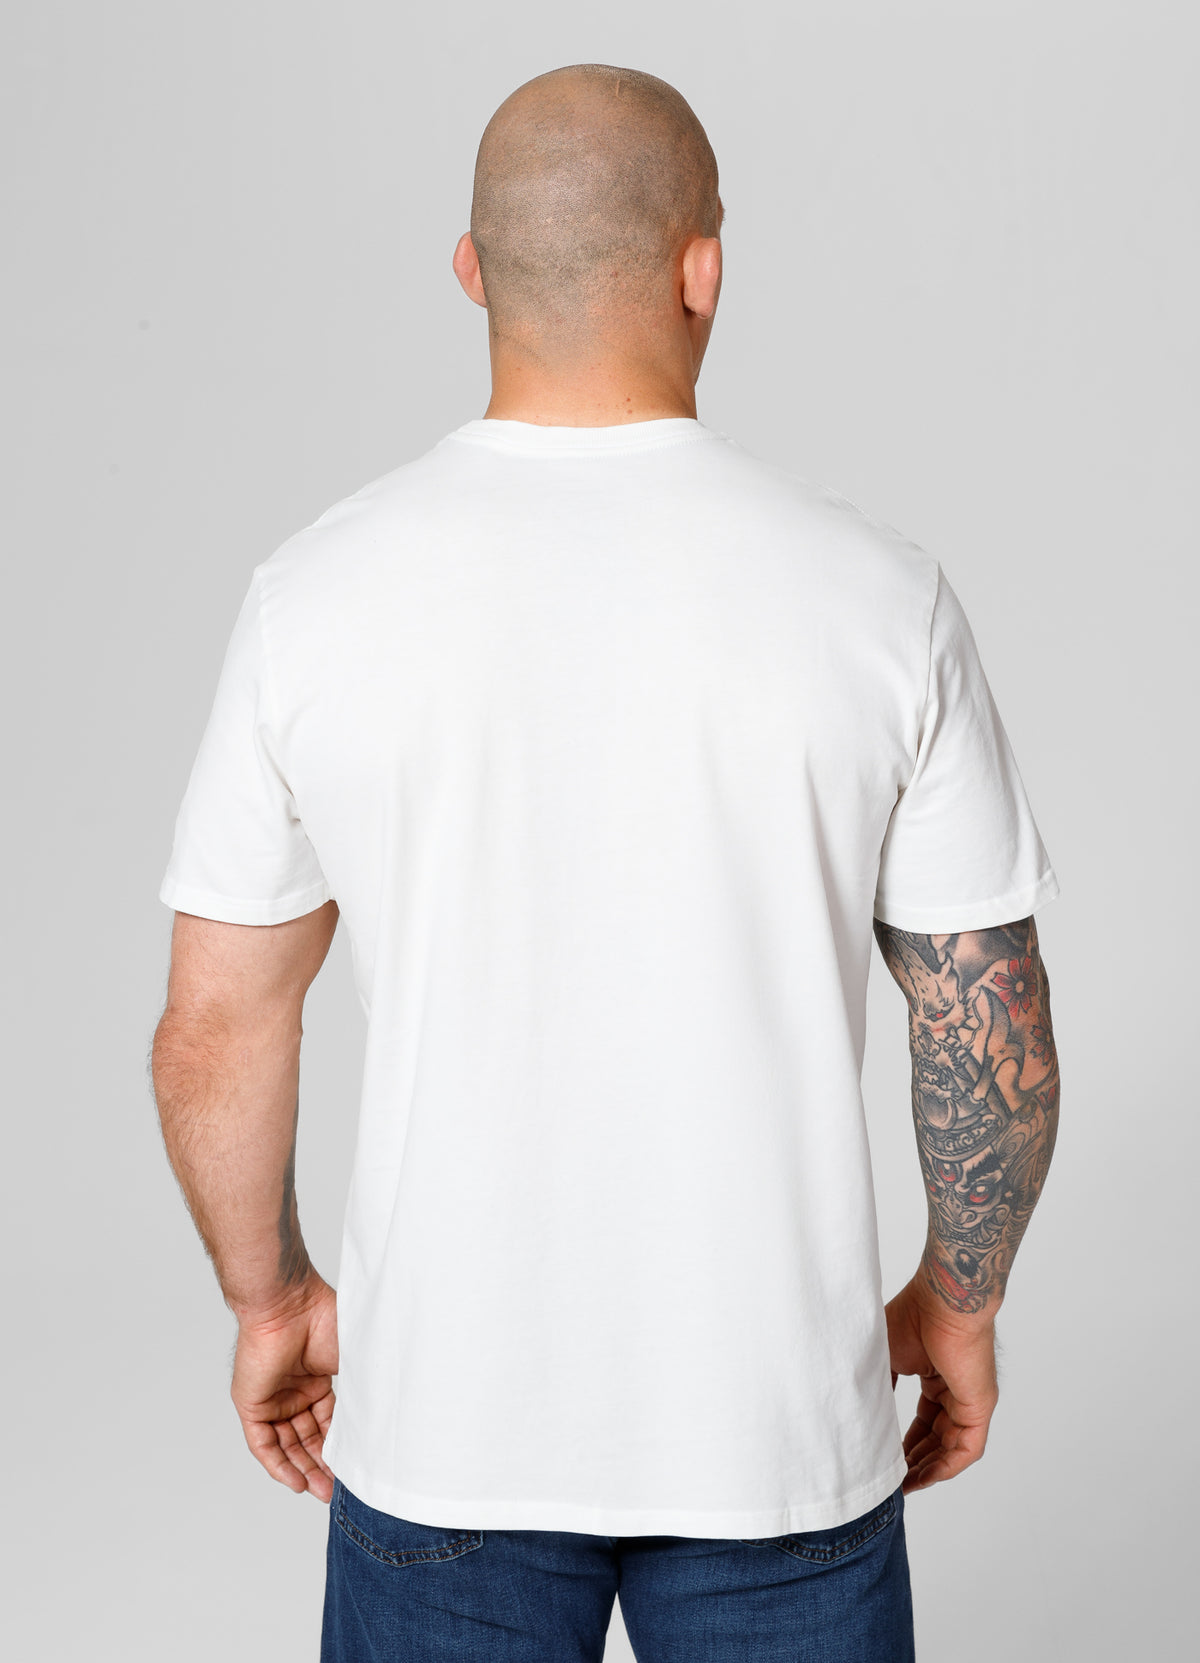 USA CAL Off White T-shirt